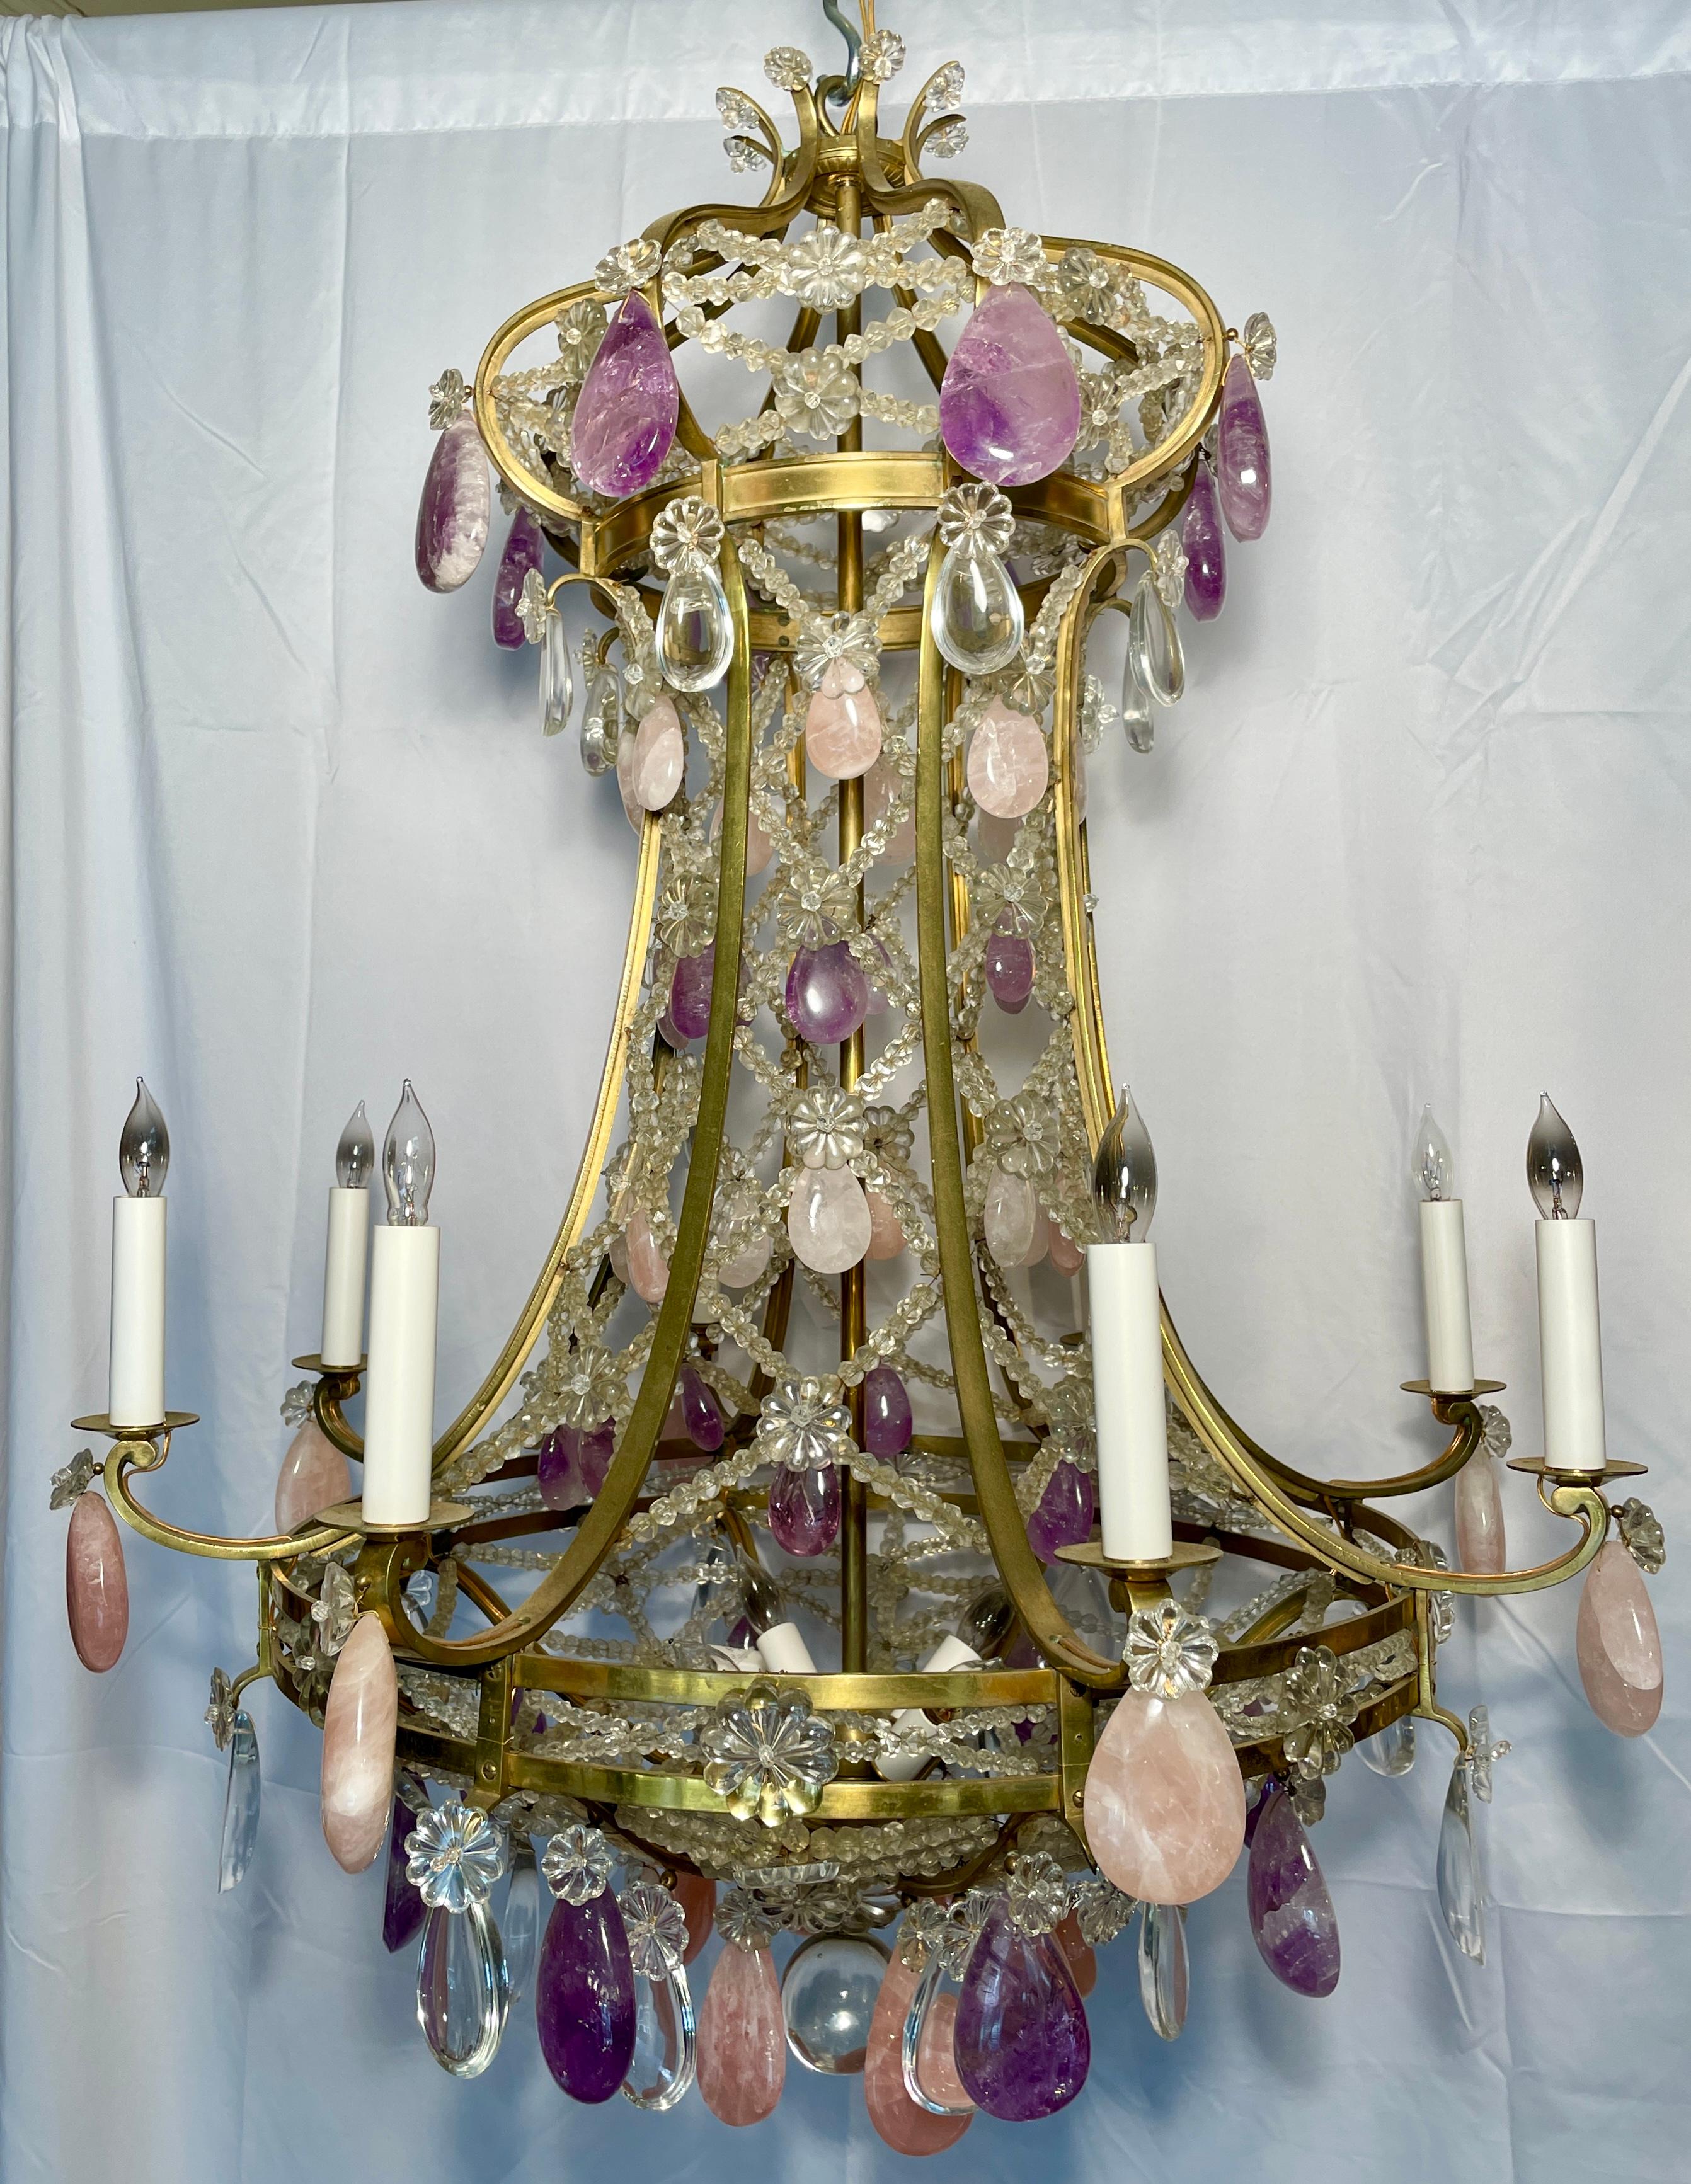 Antique French Belle Époque gold bronze, cut glass, and rose quartz & amethyst crystal chandelier. Exceptional quality.